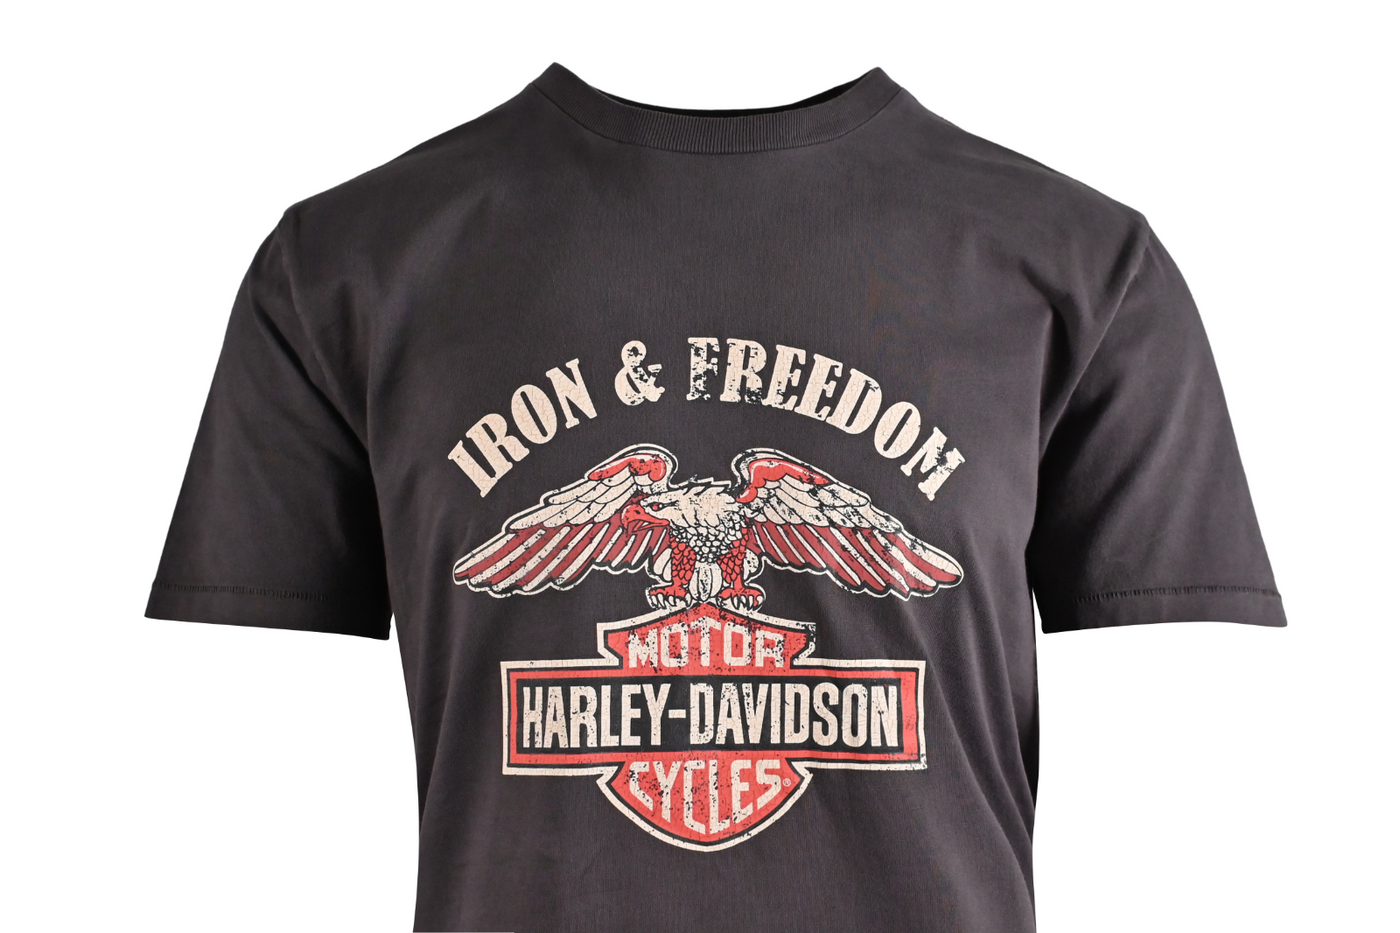 Harley-Davidson Men's T-Shirt Black Iron & Freedom Short Sleeve (S53)